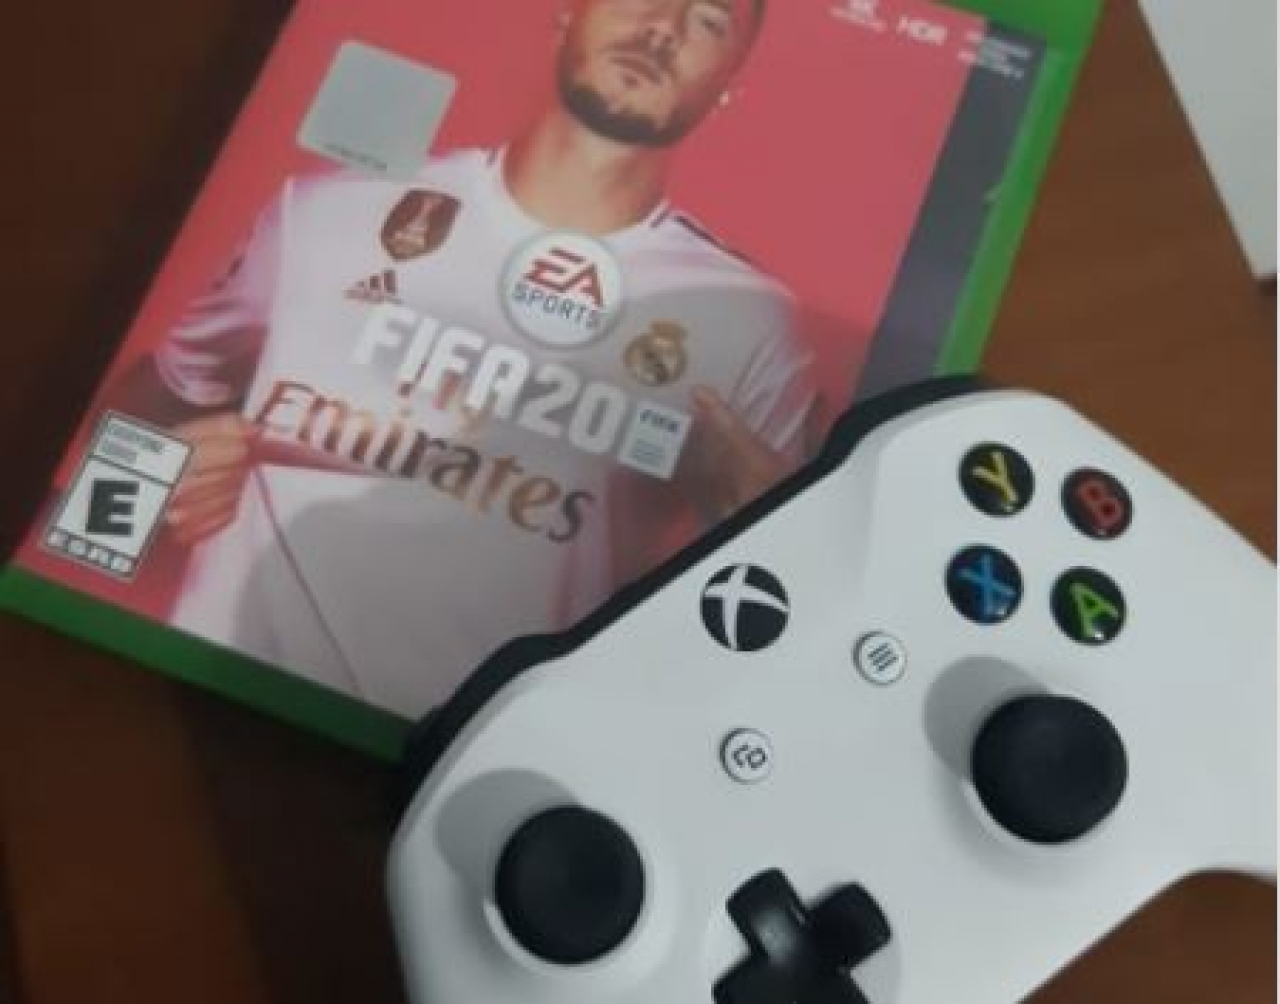 Control Xbox One y videojuego FIFA 20.|||